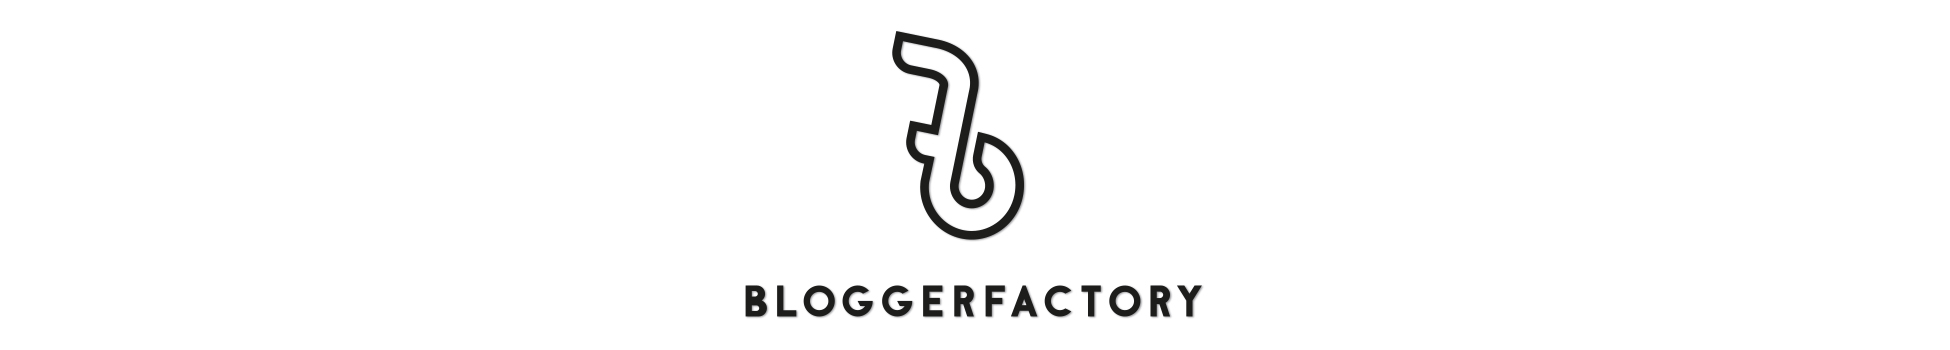 Bloggerfactory Logo